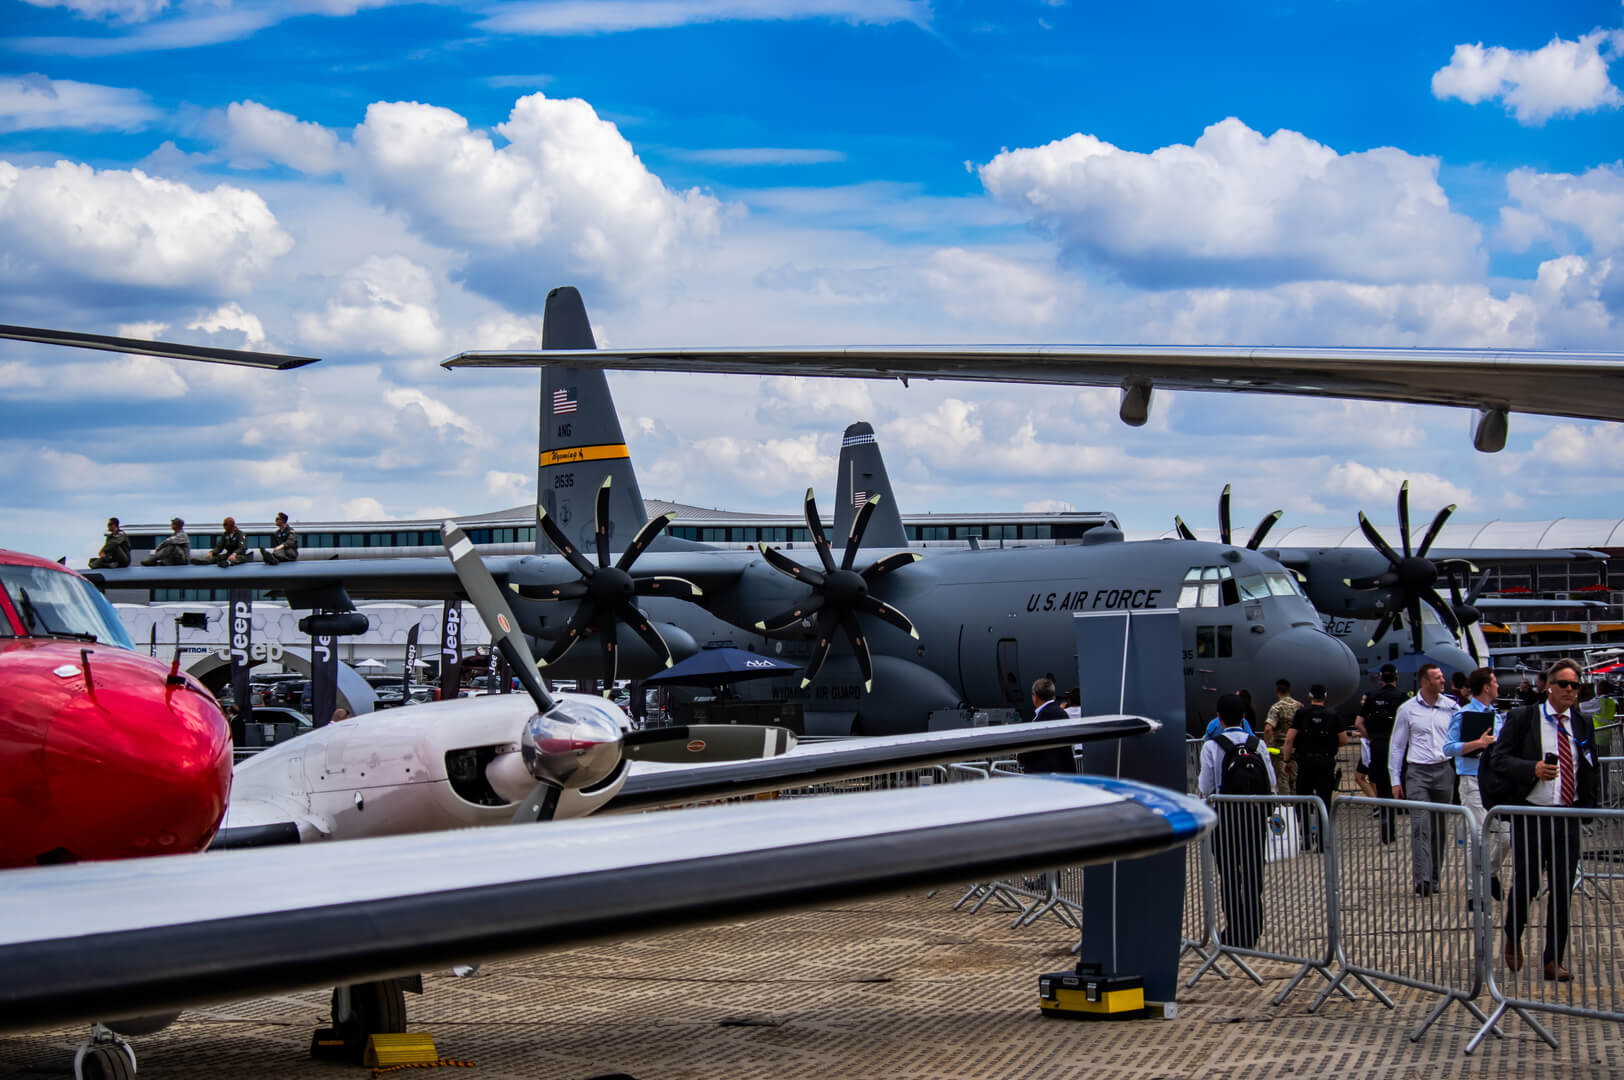 Farnborough, Hampshire, UK - A Hercules aircraft on static display, at the Farnborough air show 2018